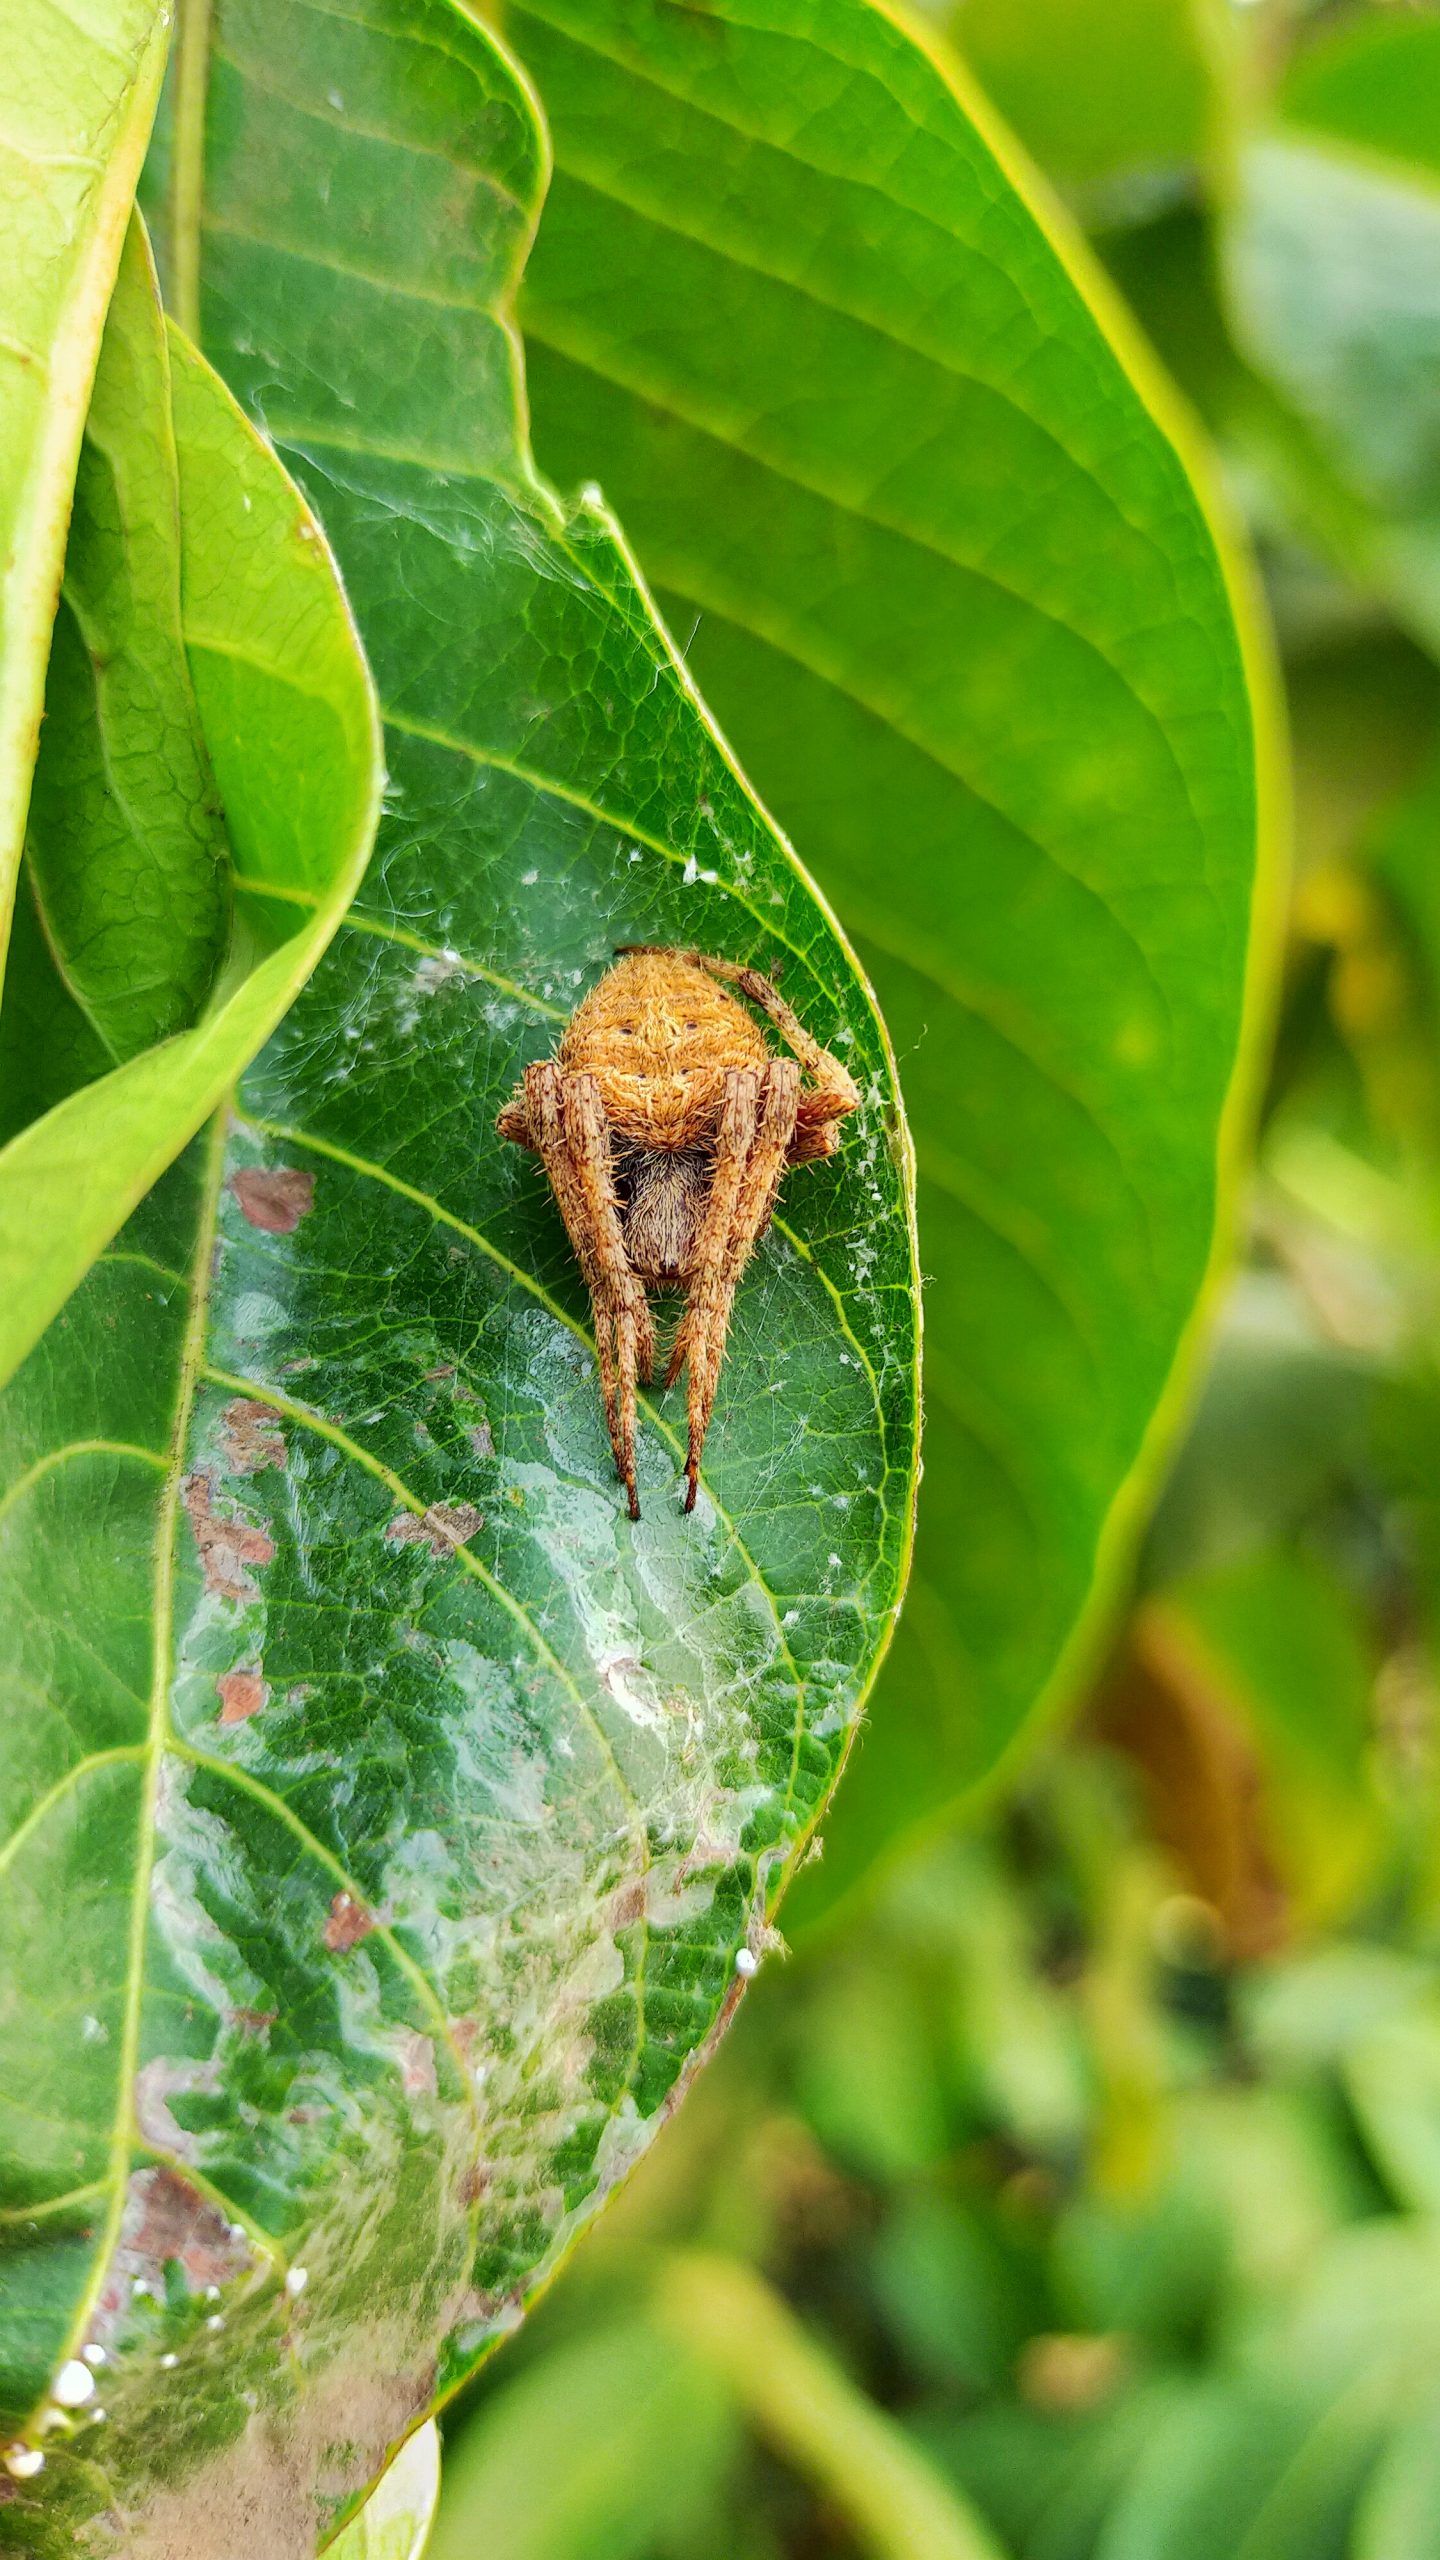 A spider on a green leaf